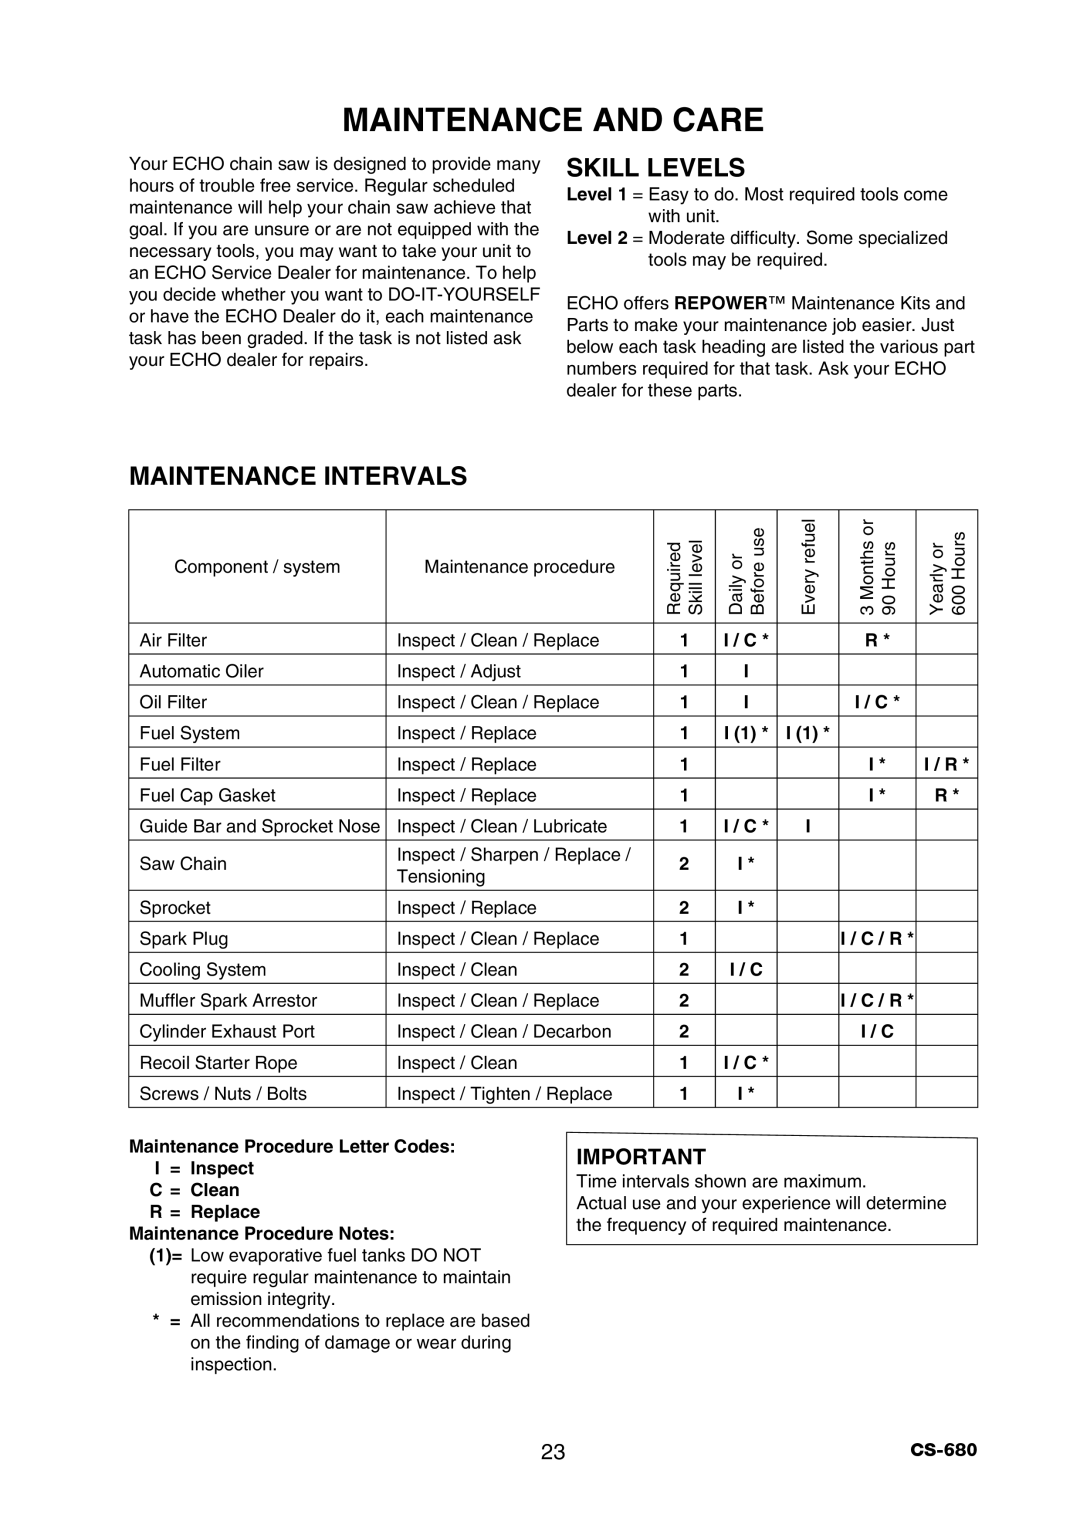 Echo CS-680 Maintenance And Care, Skill Levels, Maintenance Intervals, I / C / R, Maintenance Procedure Notes 